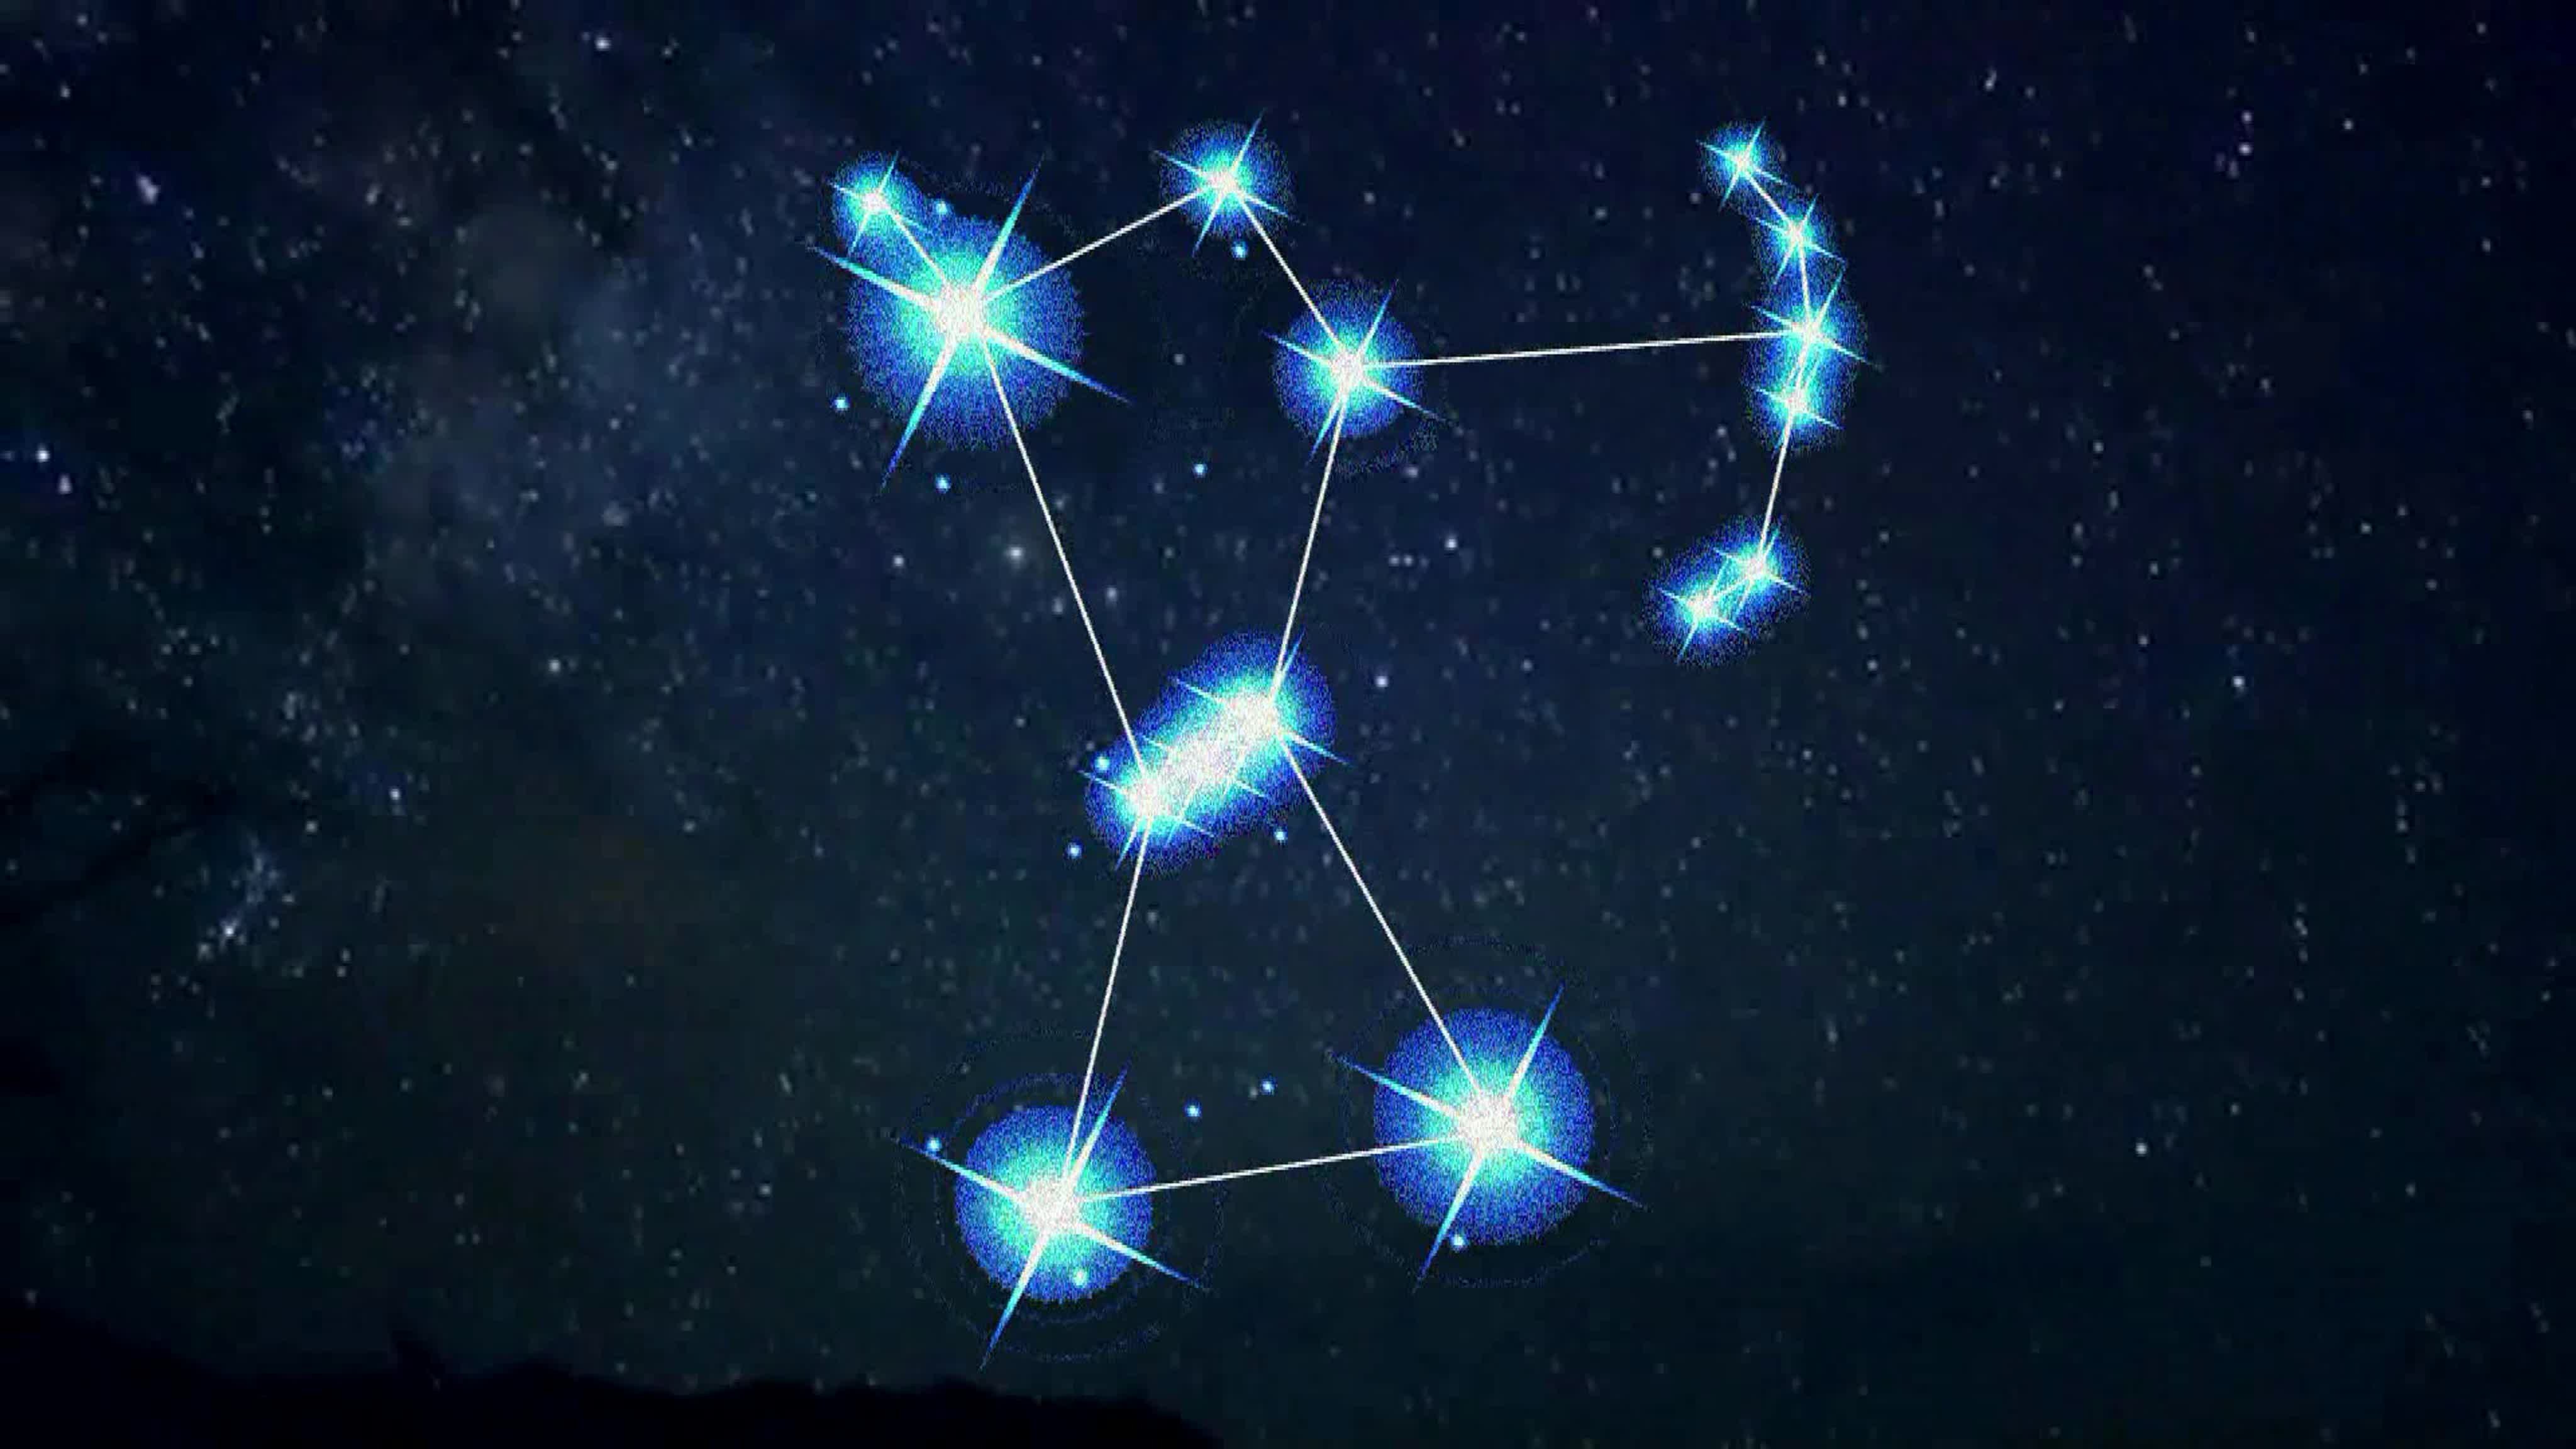 Созвездие туапсе. Созвездие Орион созвездия. Созвездие Ориона и Плеяды. Созвездие Орион схема. Астеризм сноп Созвездие Ориона.